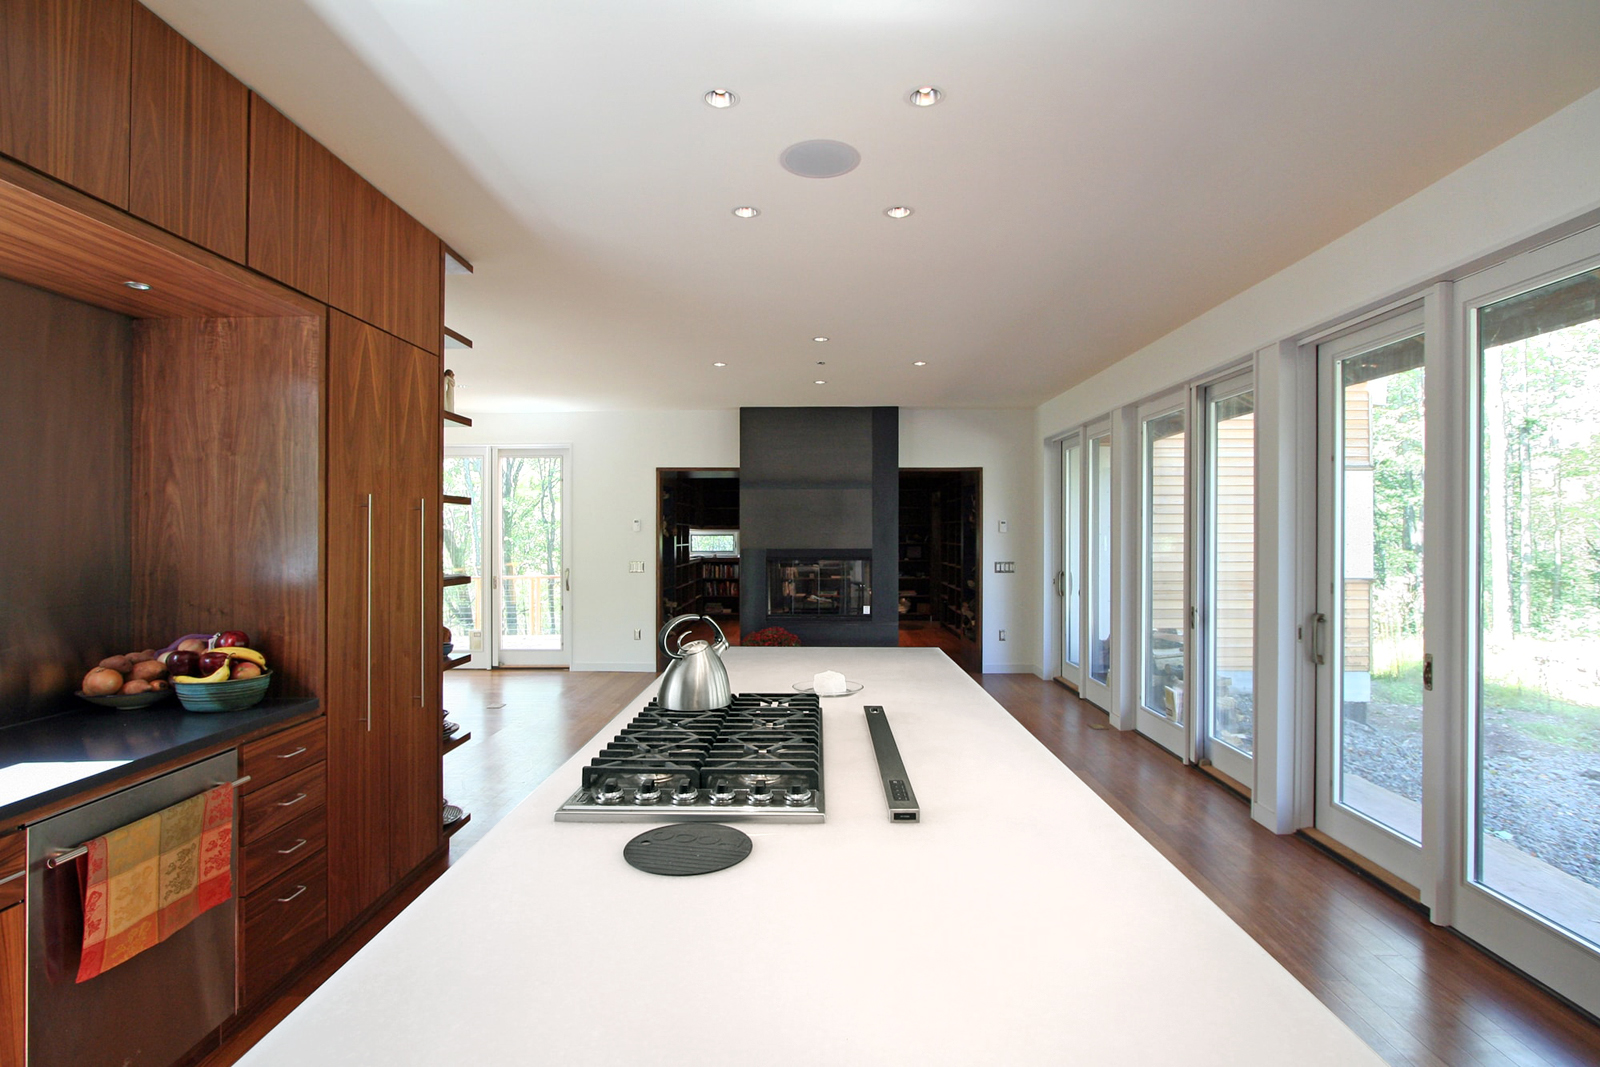 res4-resolution-4-architecture-modern-modular-house-prefab-harmony-hill-interior-kitchen-island-millwork-fireplace.jpg